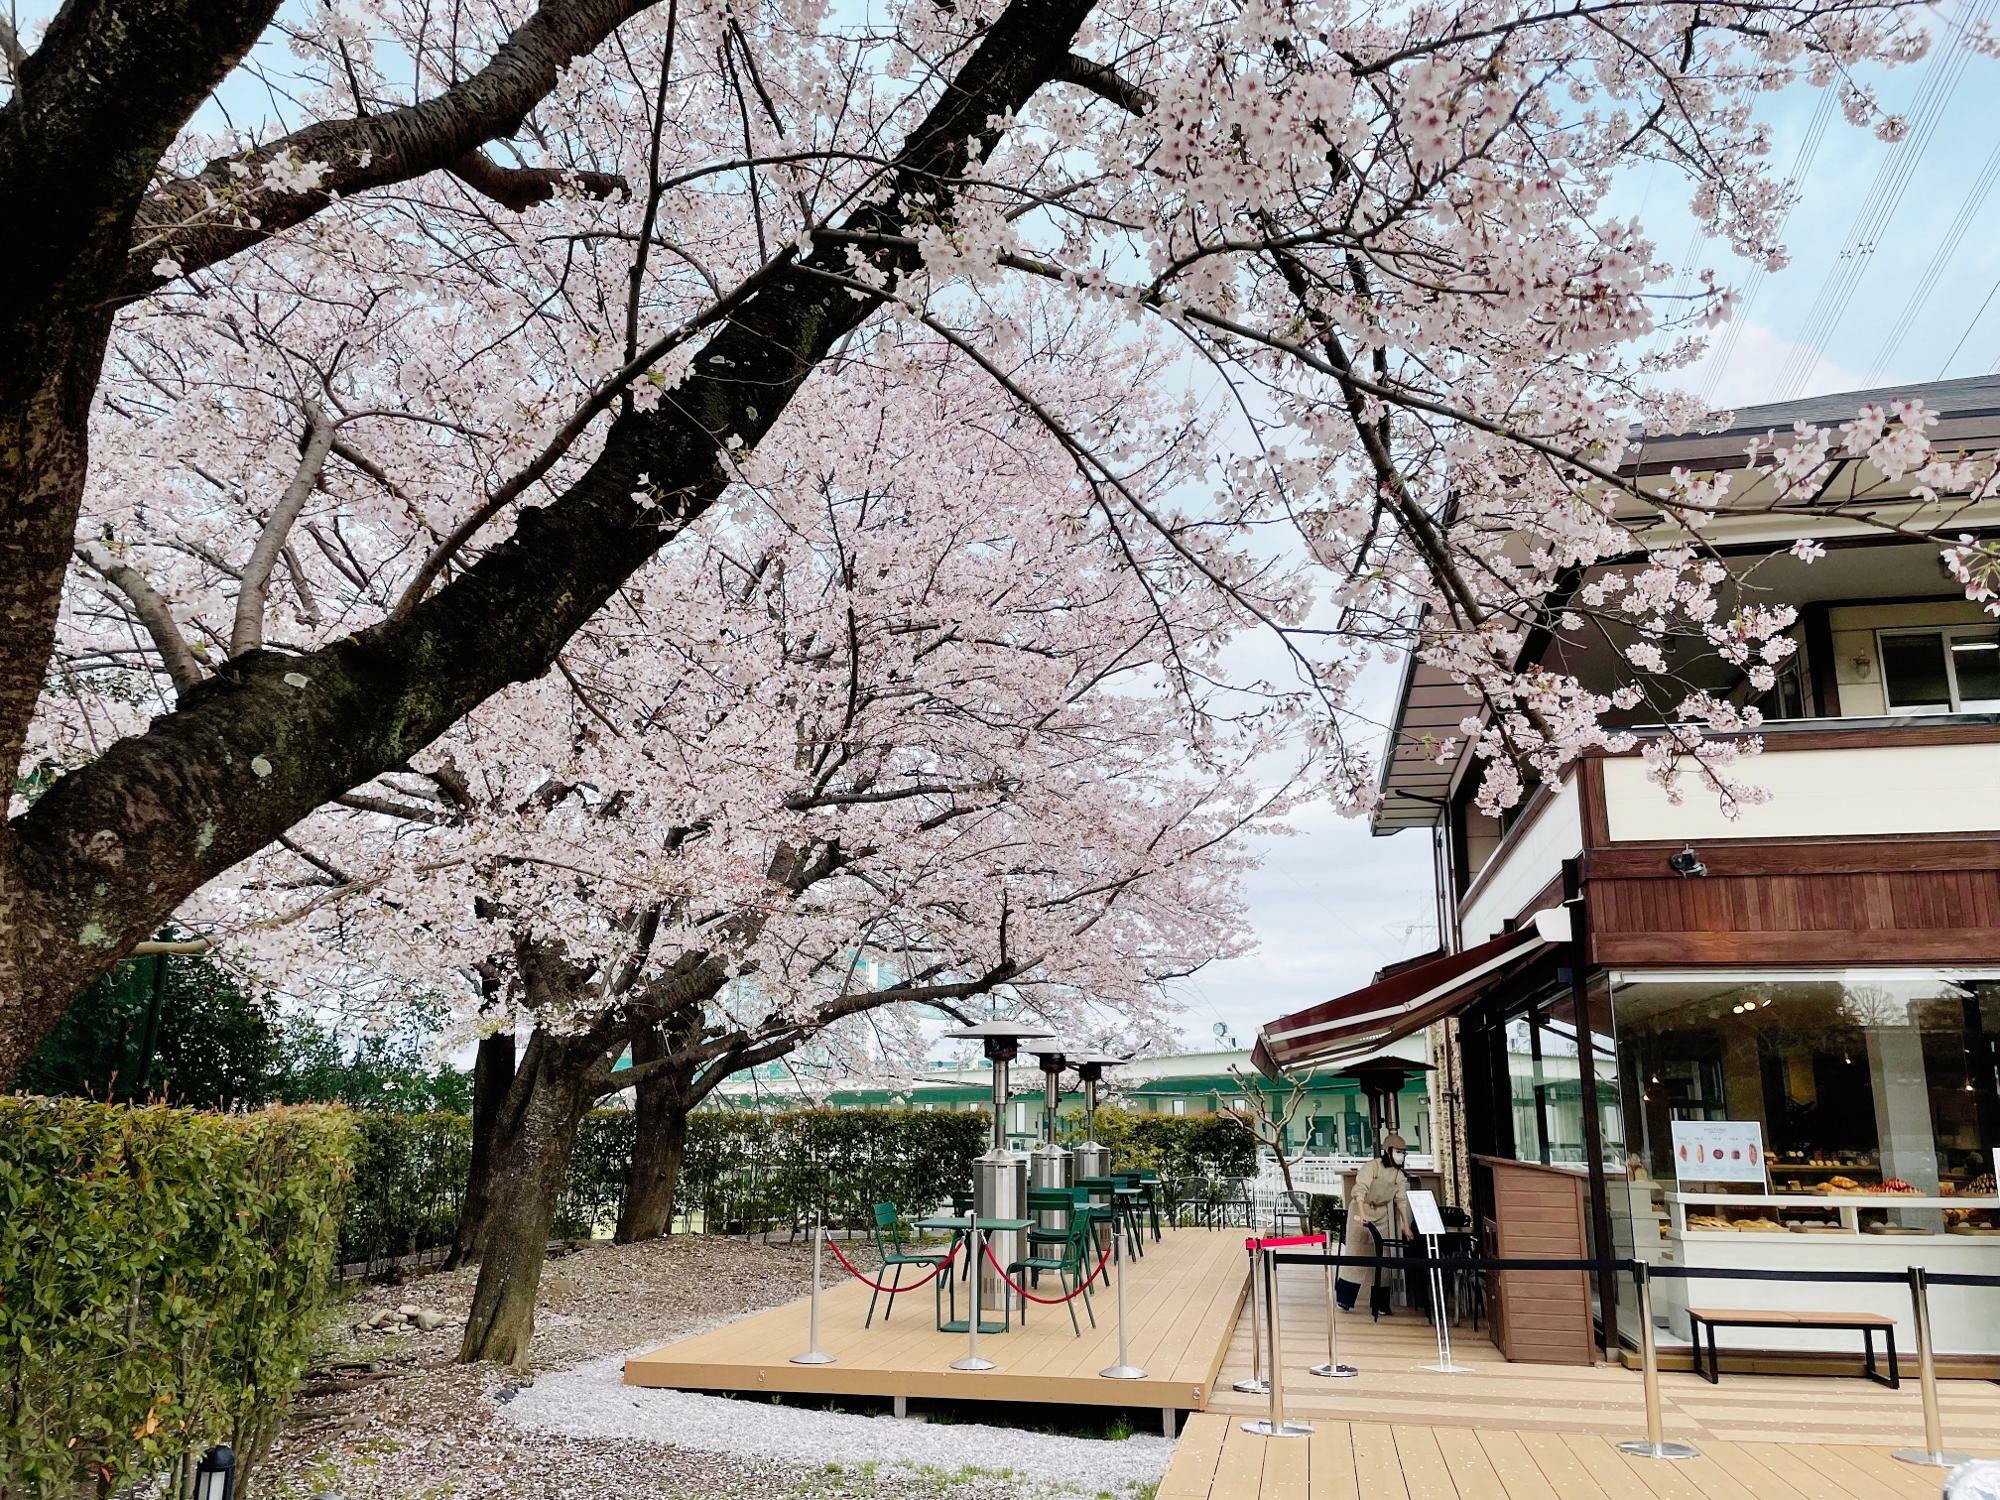 3月27日撮影。現在桜は満開